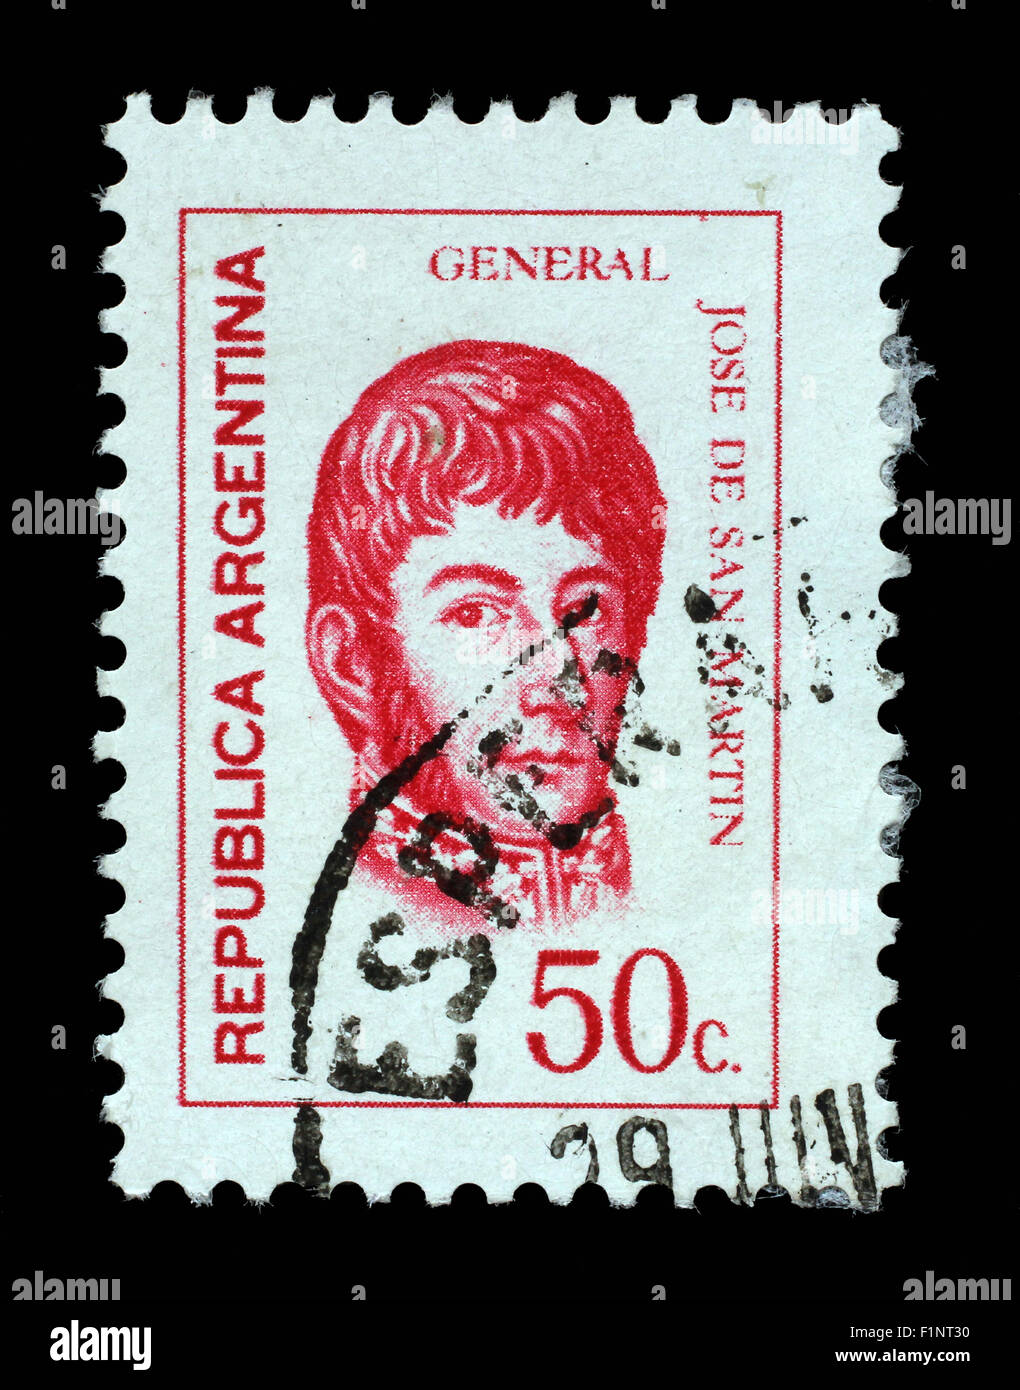 Stamp printed in the Argentina shows Jose de San Martin, General, circa 1973 Stock Photo